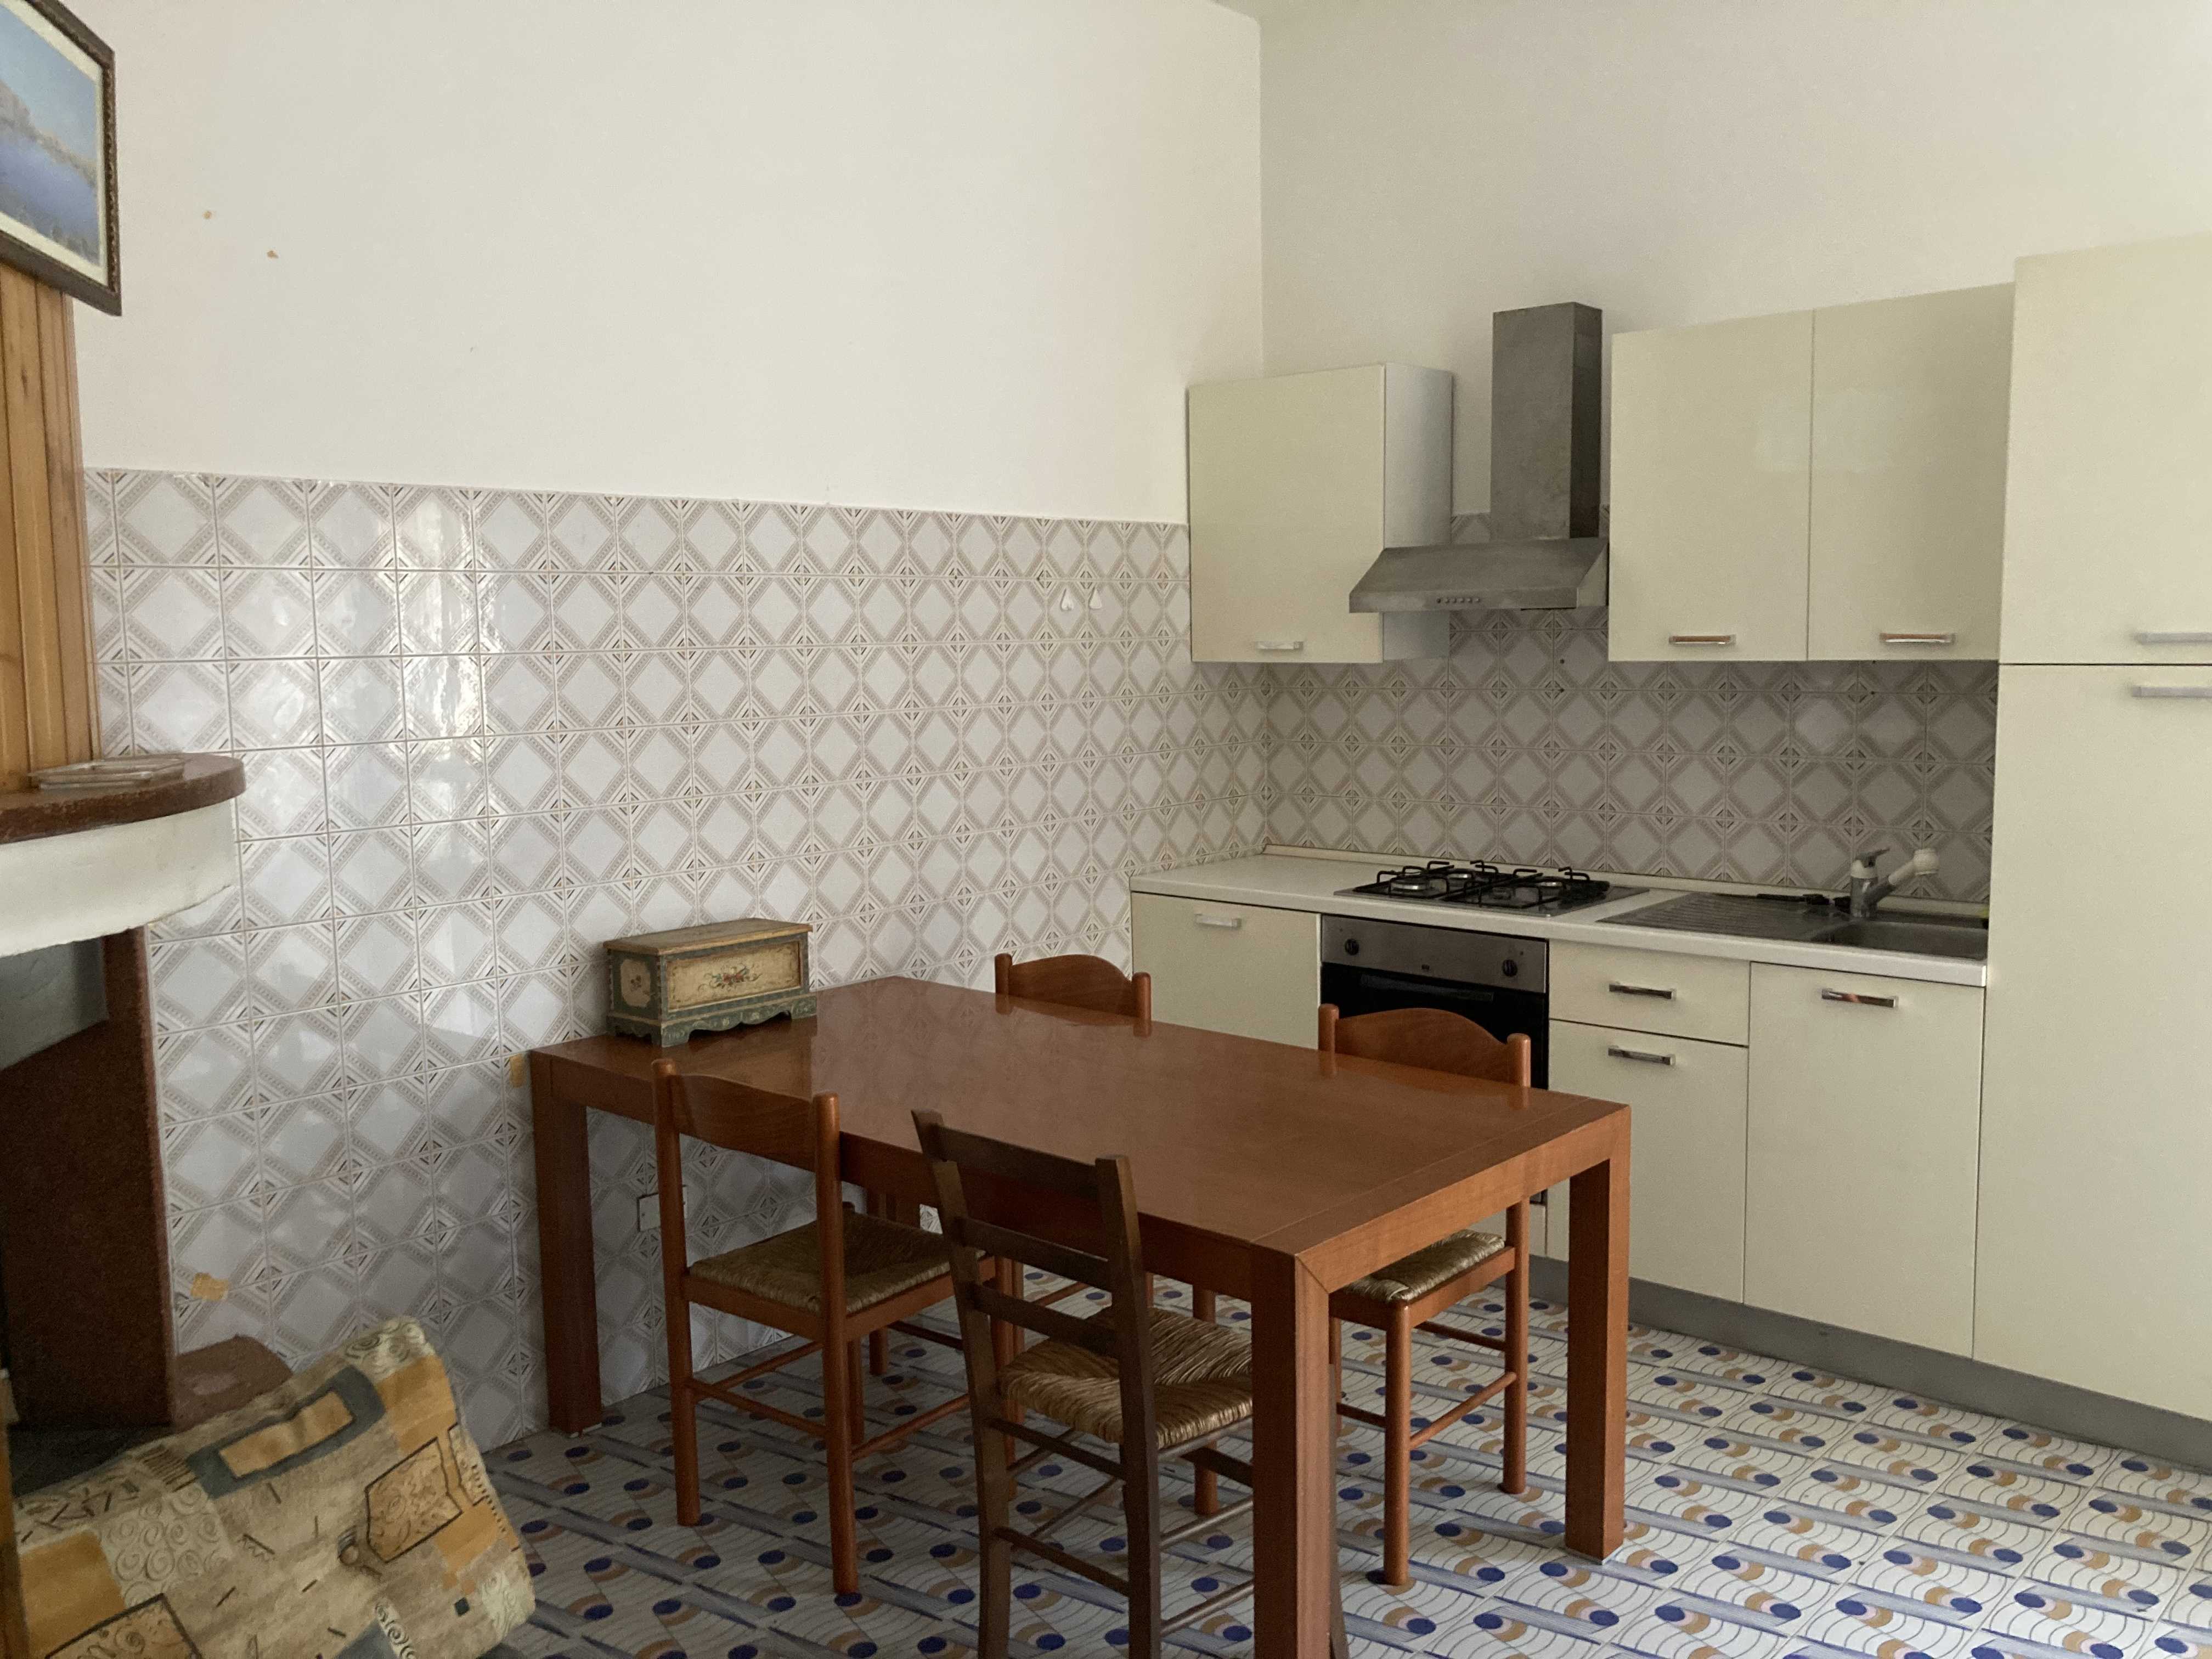 Vendite Salento: Vendita villa bifamiliare (Salve) - cucina1